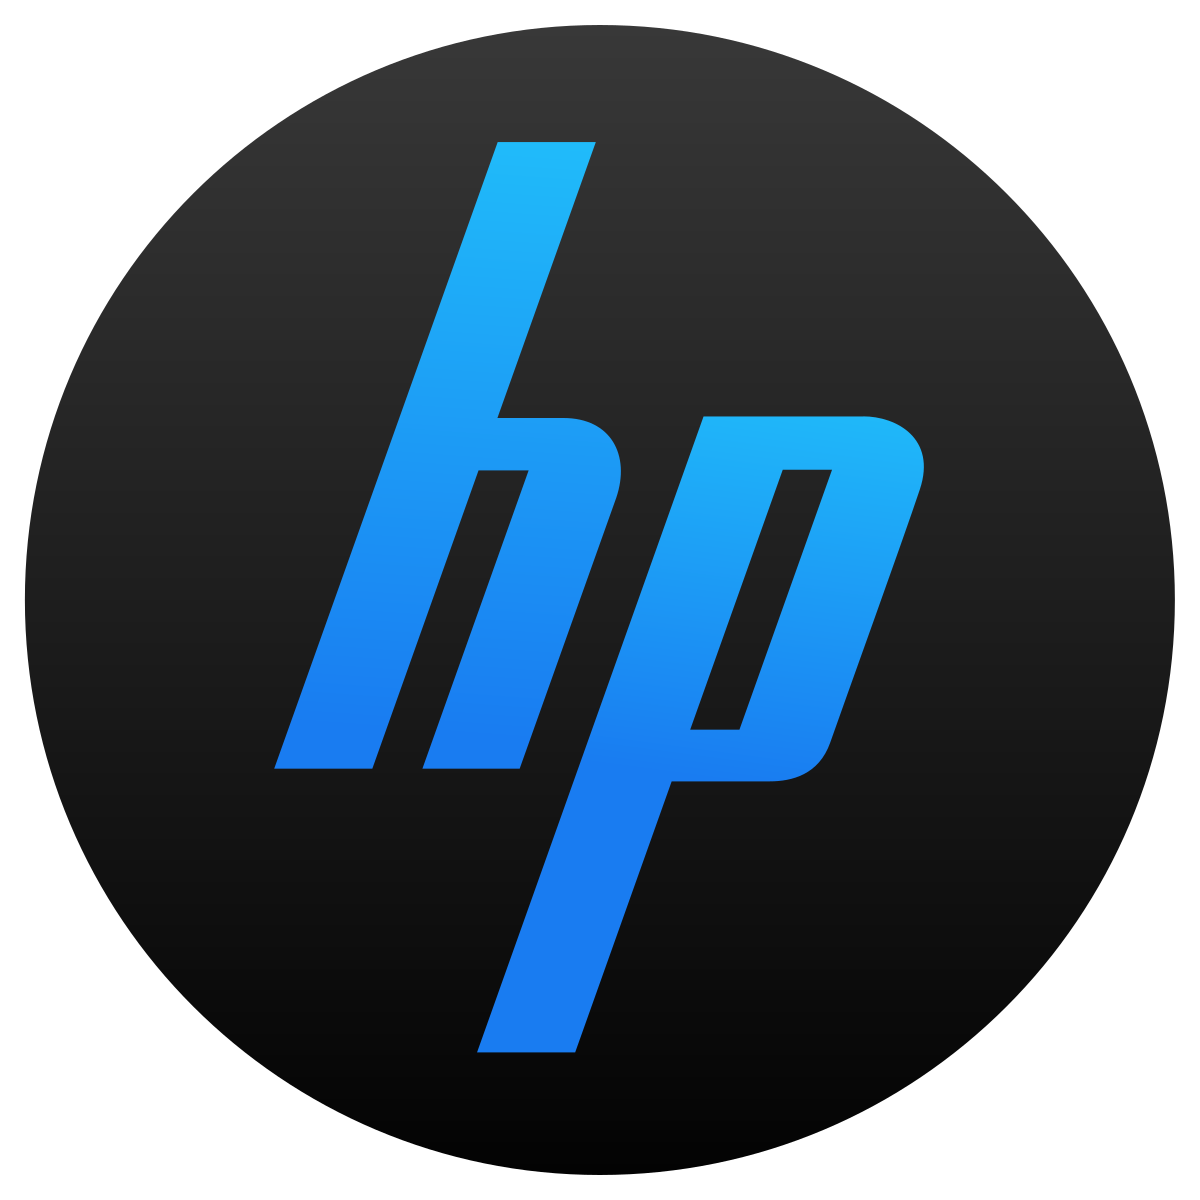 Download File:Antu hp logo.svg - Wikimedia Commons